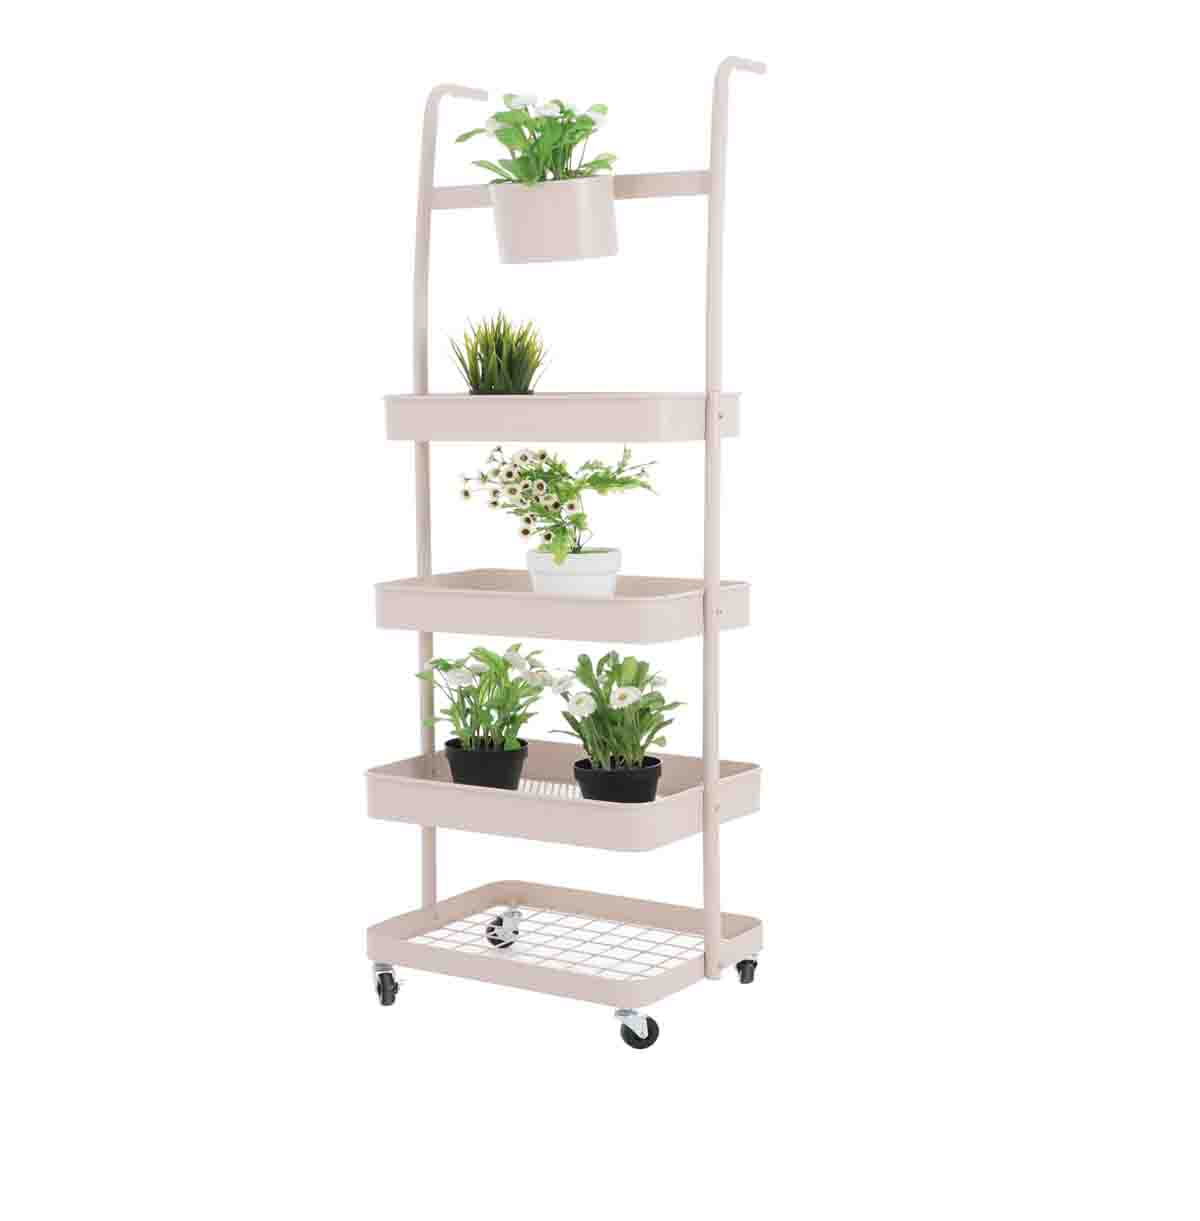 4-Tier Hanging Garden Plant Stand Trolley Cart / Metal Plant Shelf / Plant Rack / Flower Pot Organiz